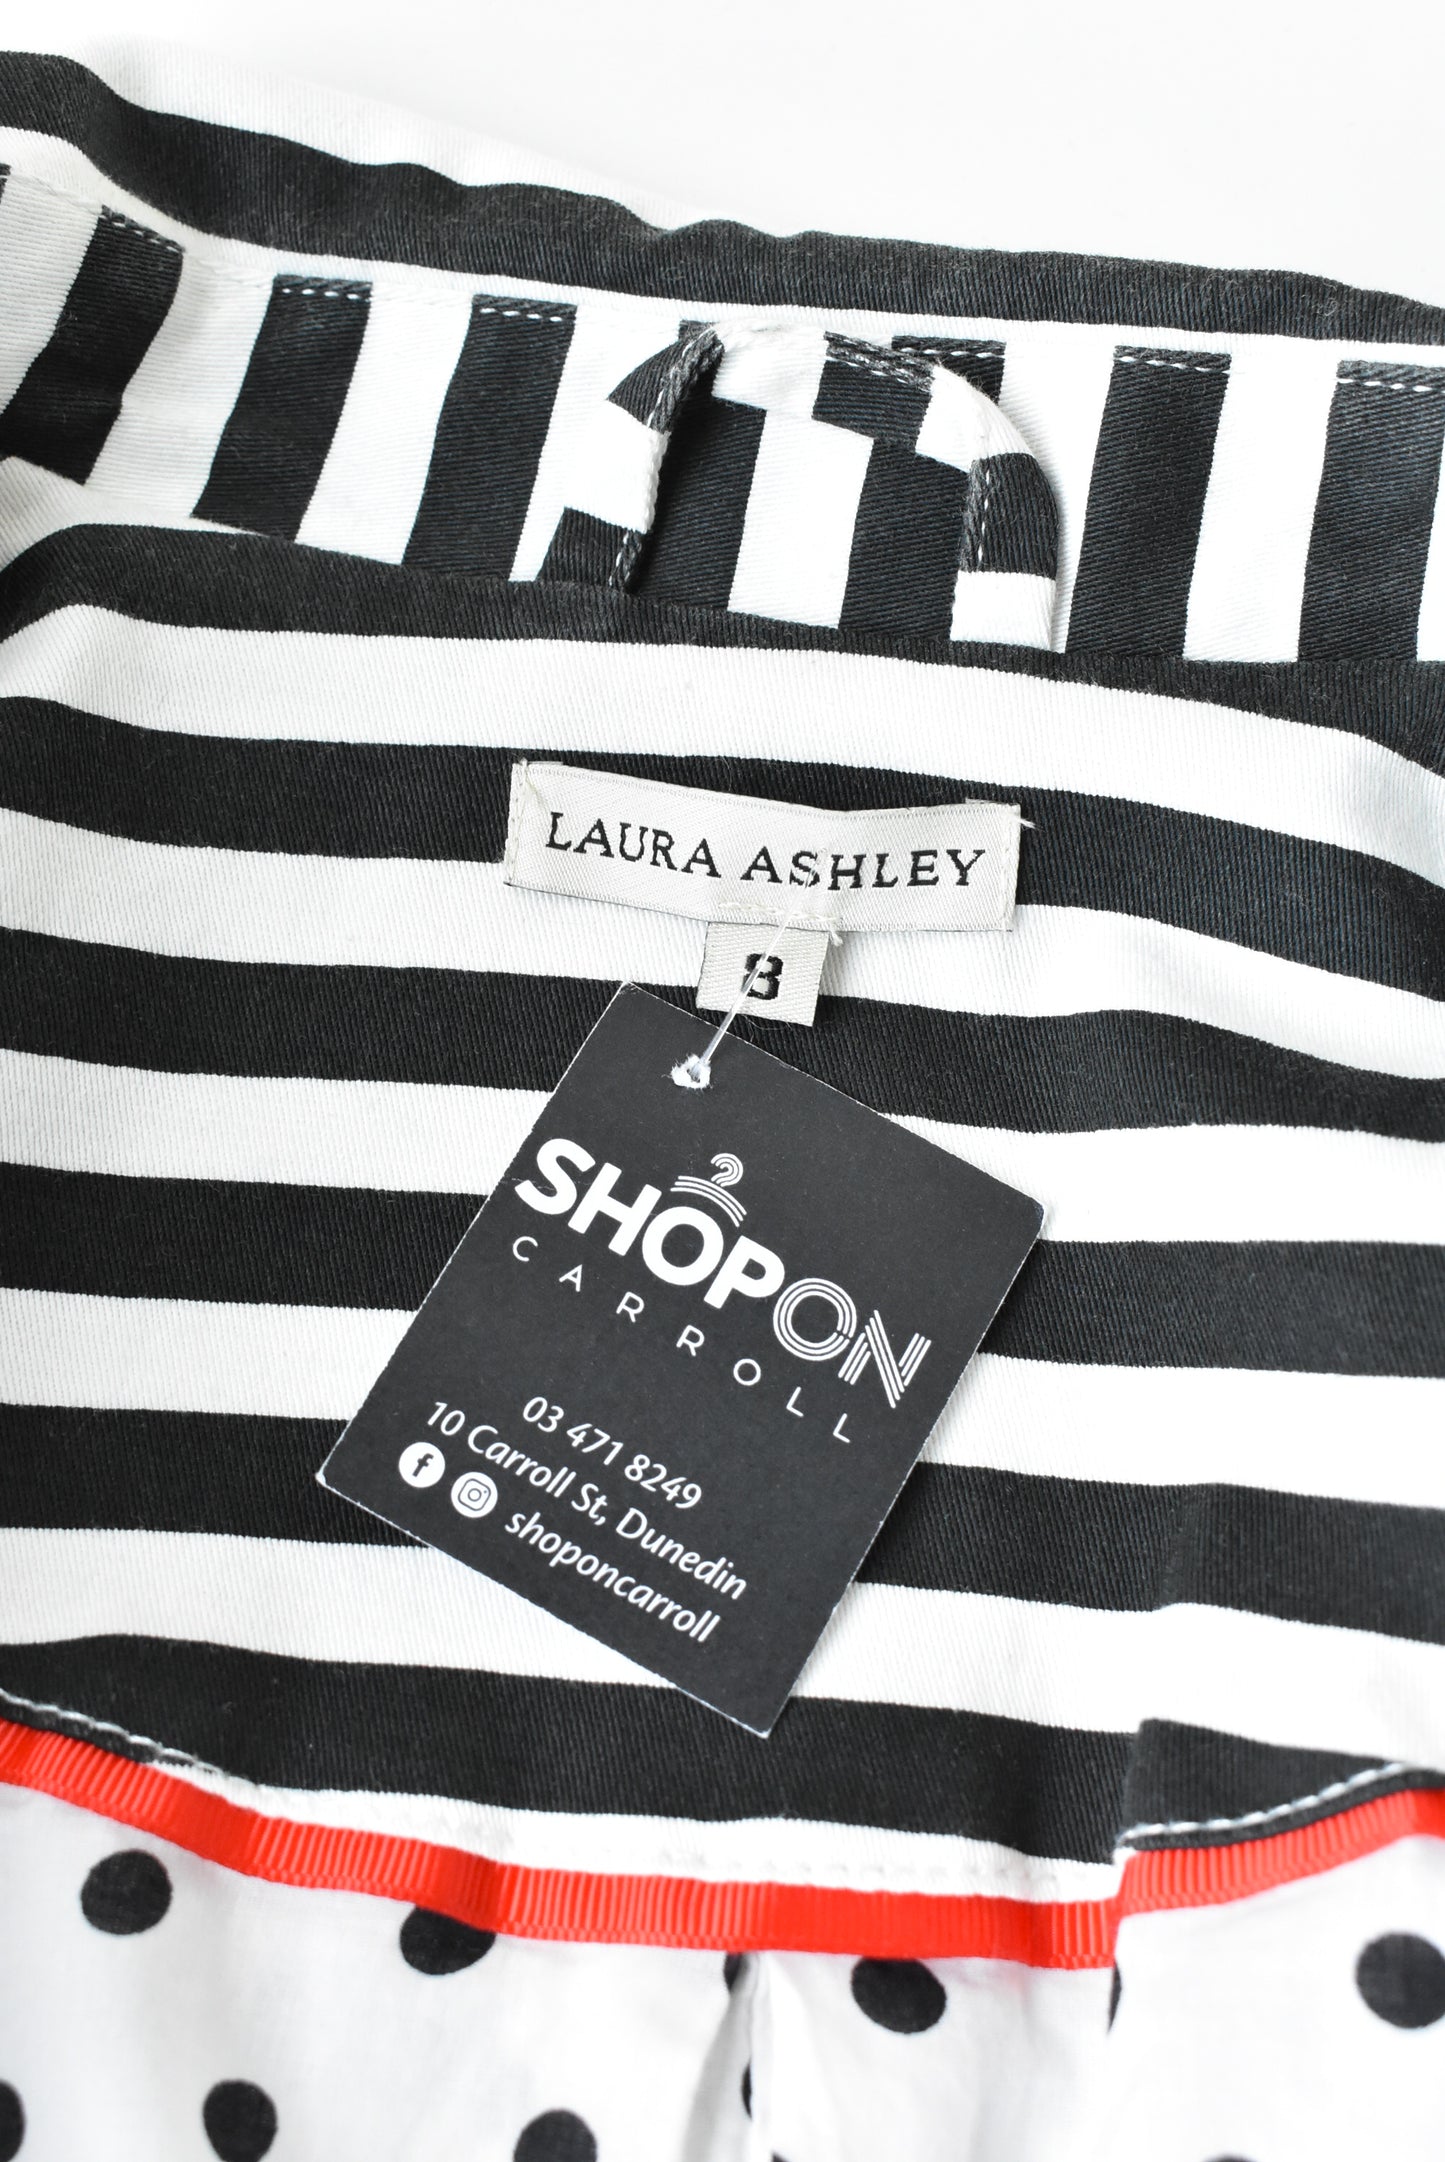 Laura Ashley black & white stripe blazer, size XS